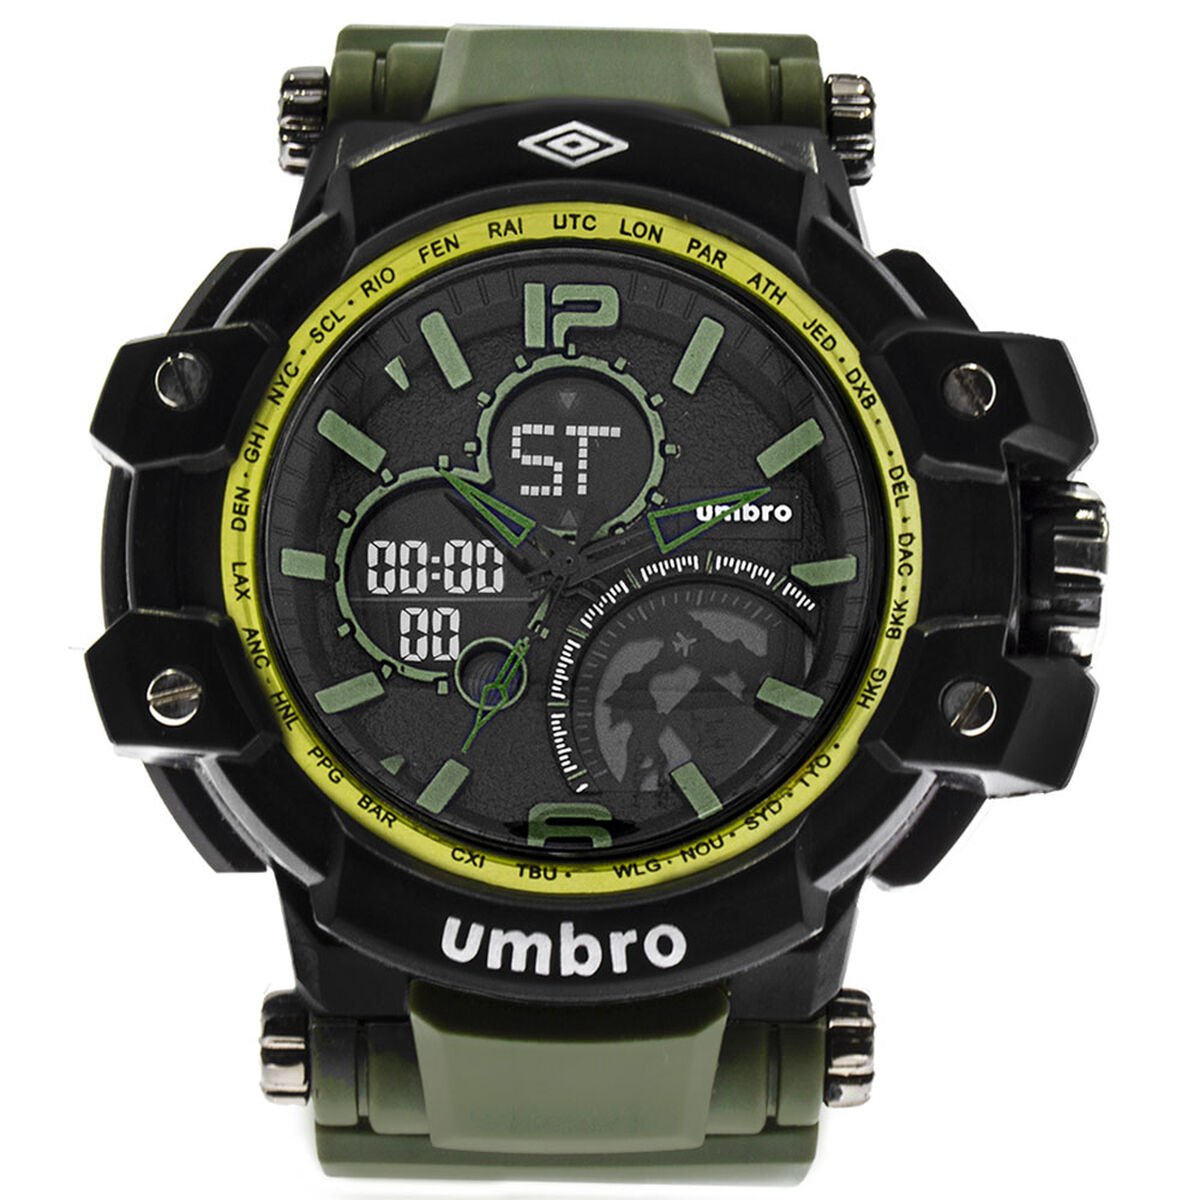 Reloj Digital UMBRO Modelo UMB-085-3